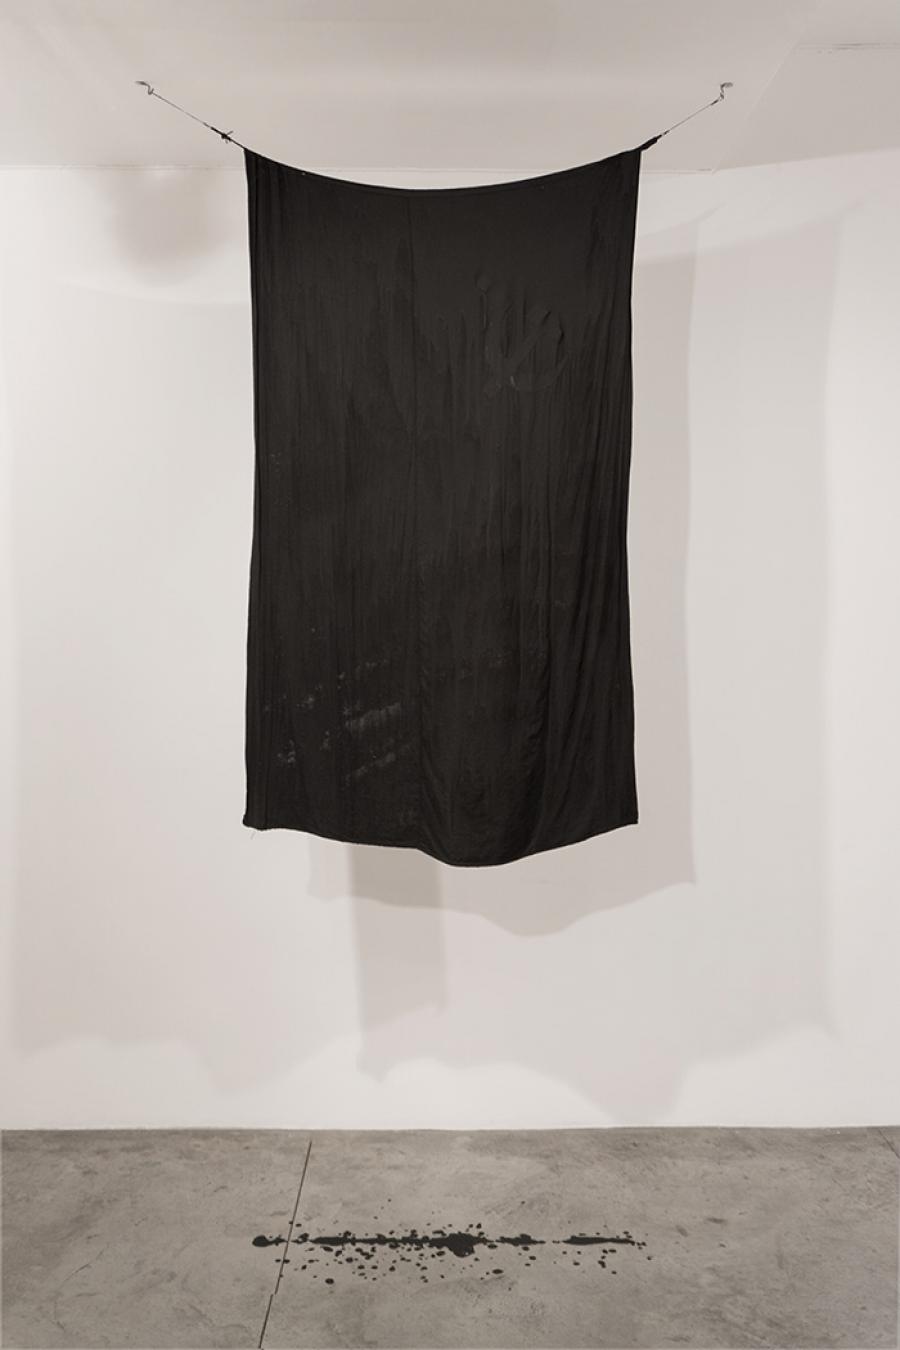 Doma, Bandera negra, 2016. Acrílico sobre tela, 140 X 110 cm. 